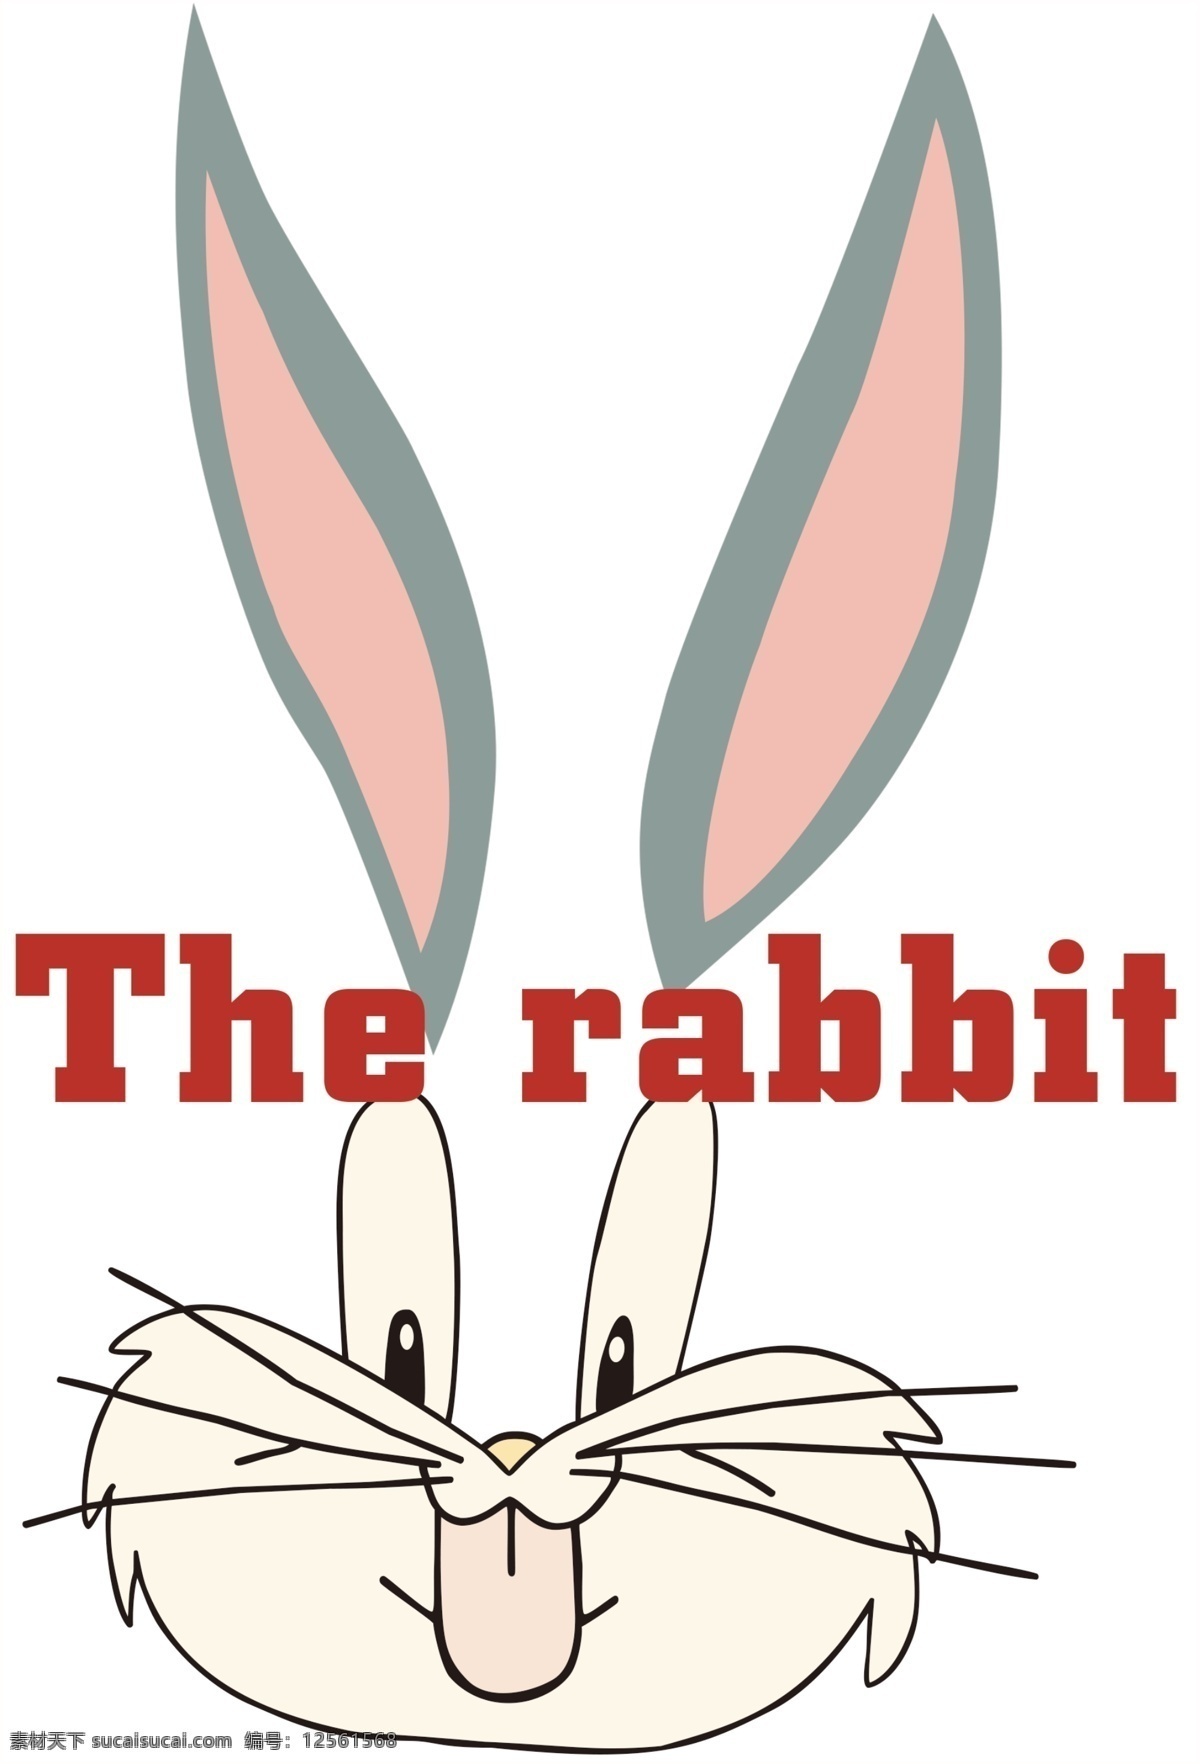 rabbit 兔子 大耳朵 卡通 分层